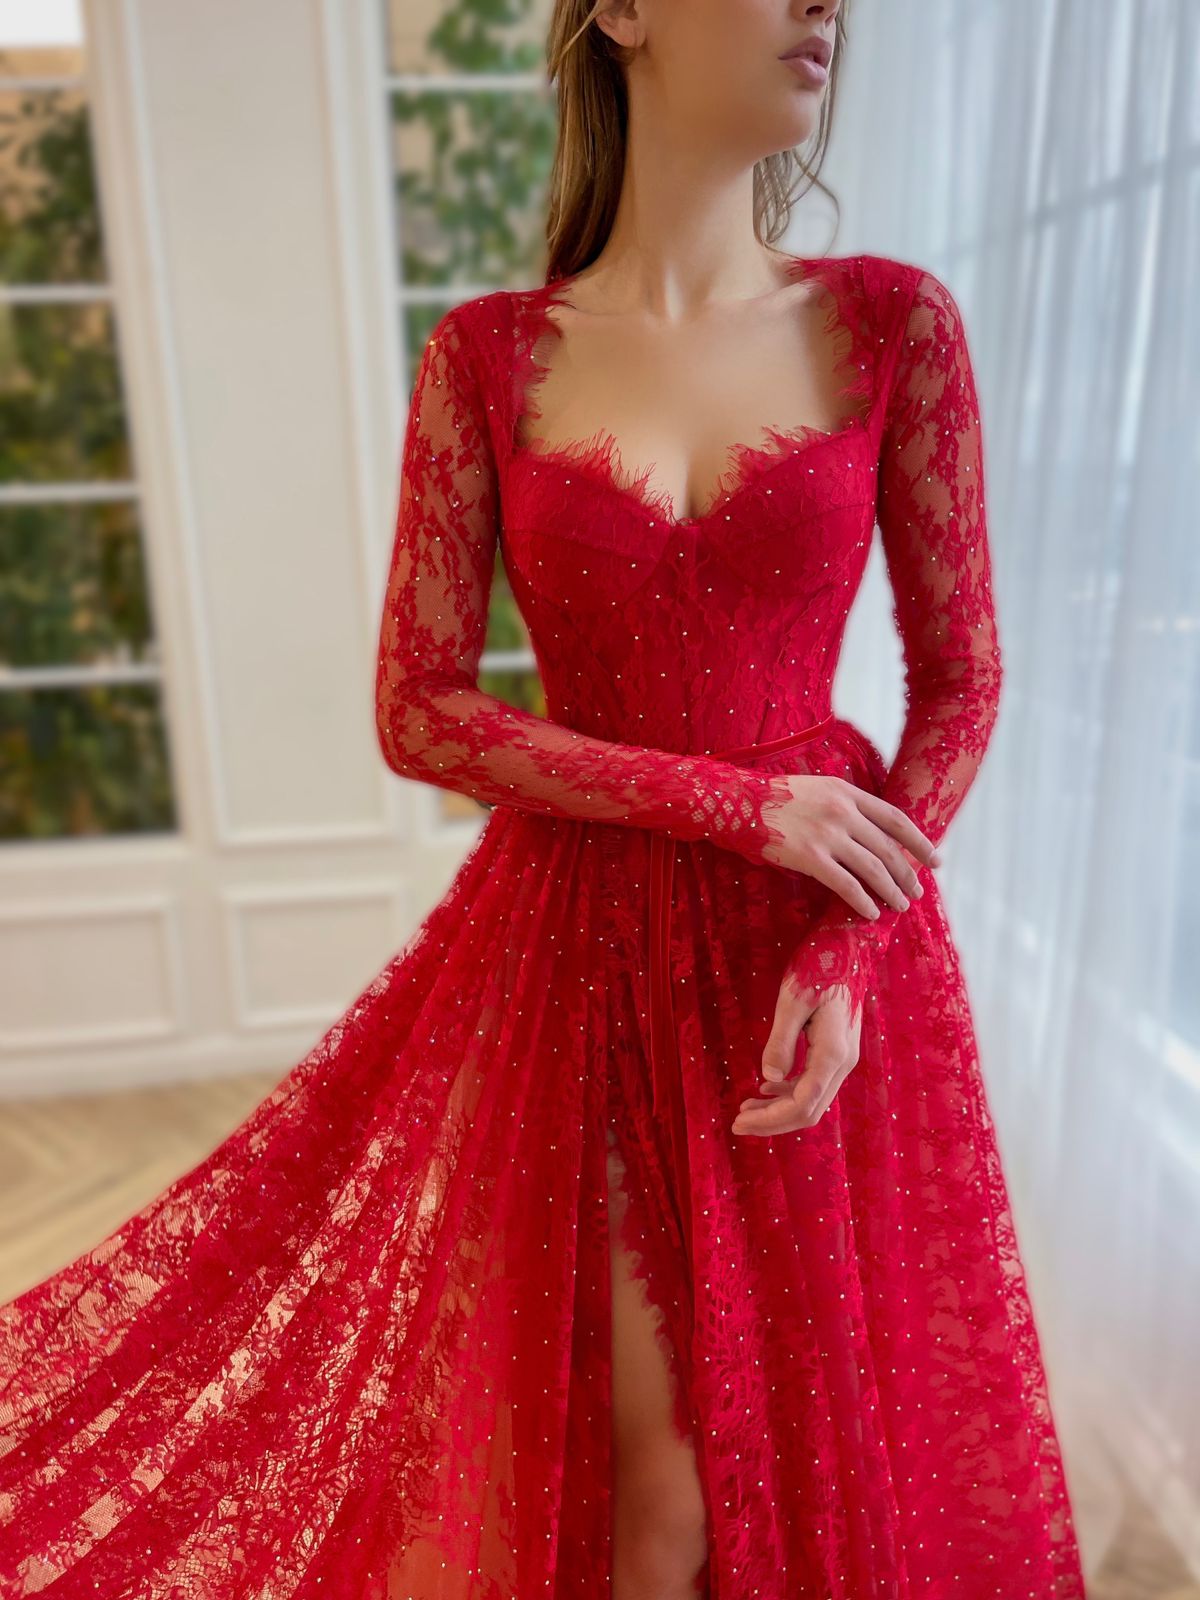 Wine Red Dress - Embroidered Long Sleeve Dress - Ruffled Dress - Lulus